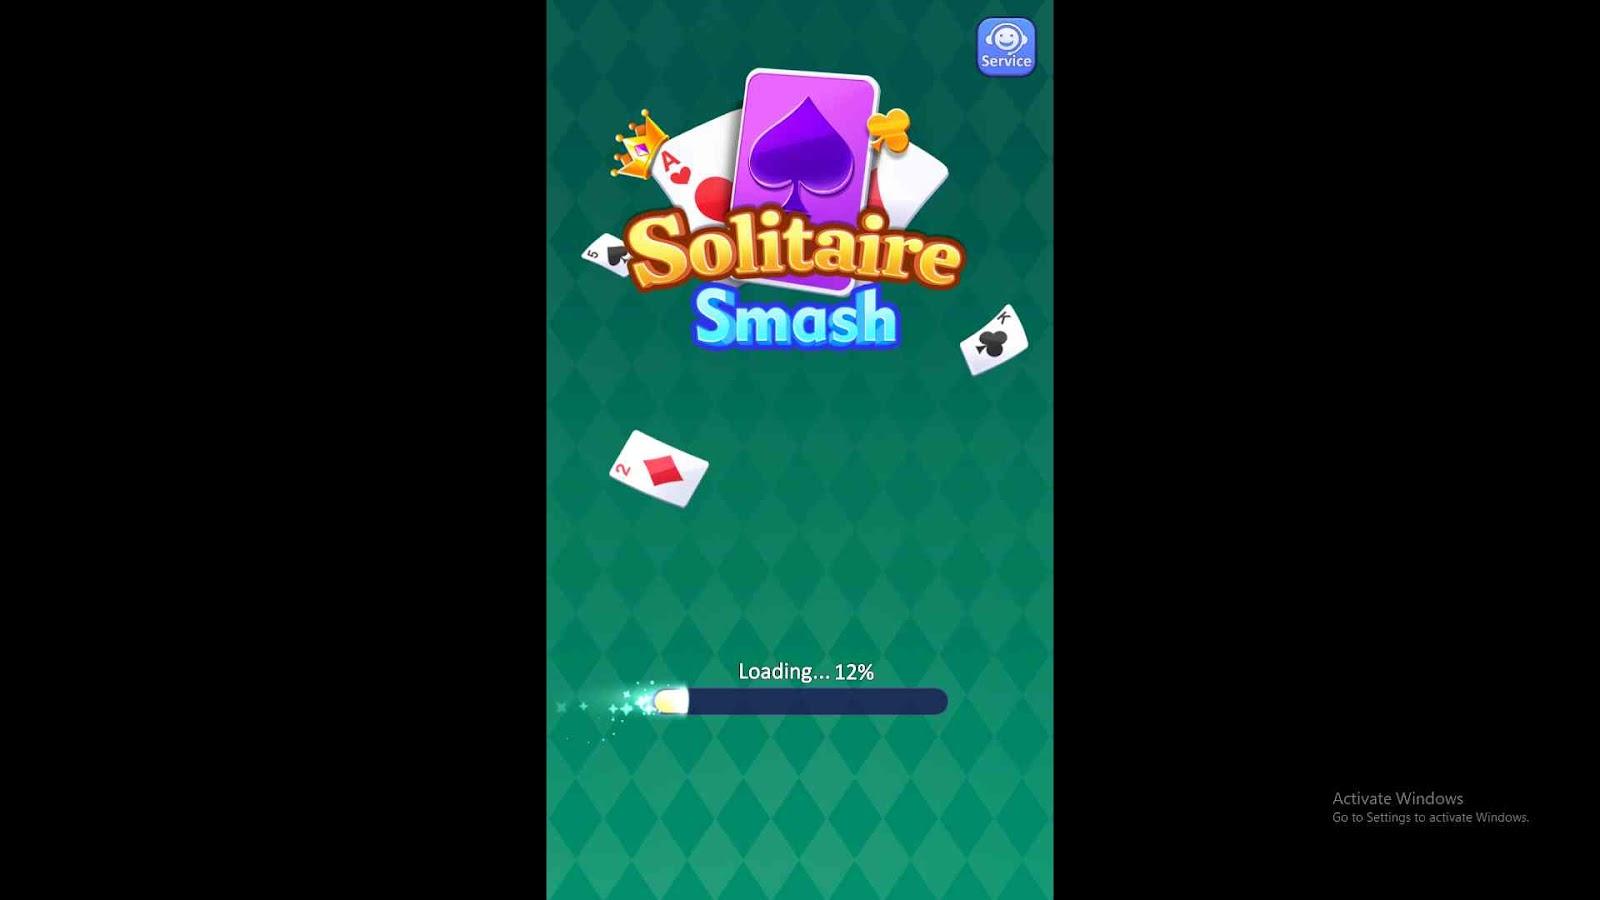 Solitaire Smash: Real Cash!